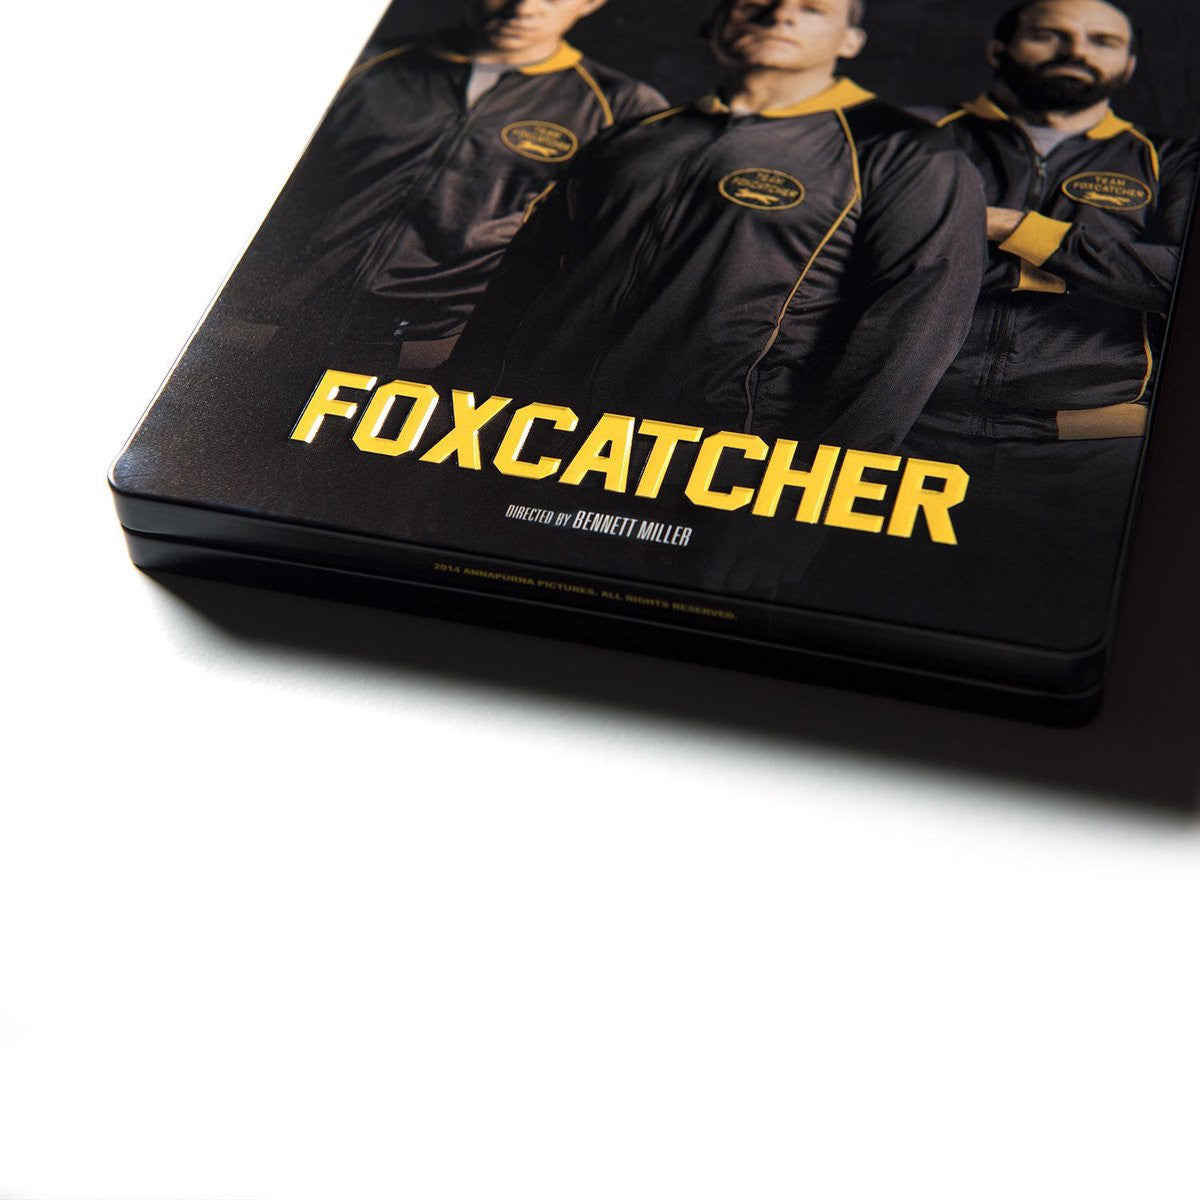 FOXCATCHER Steelbook: Full Slip (Type B)